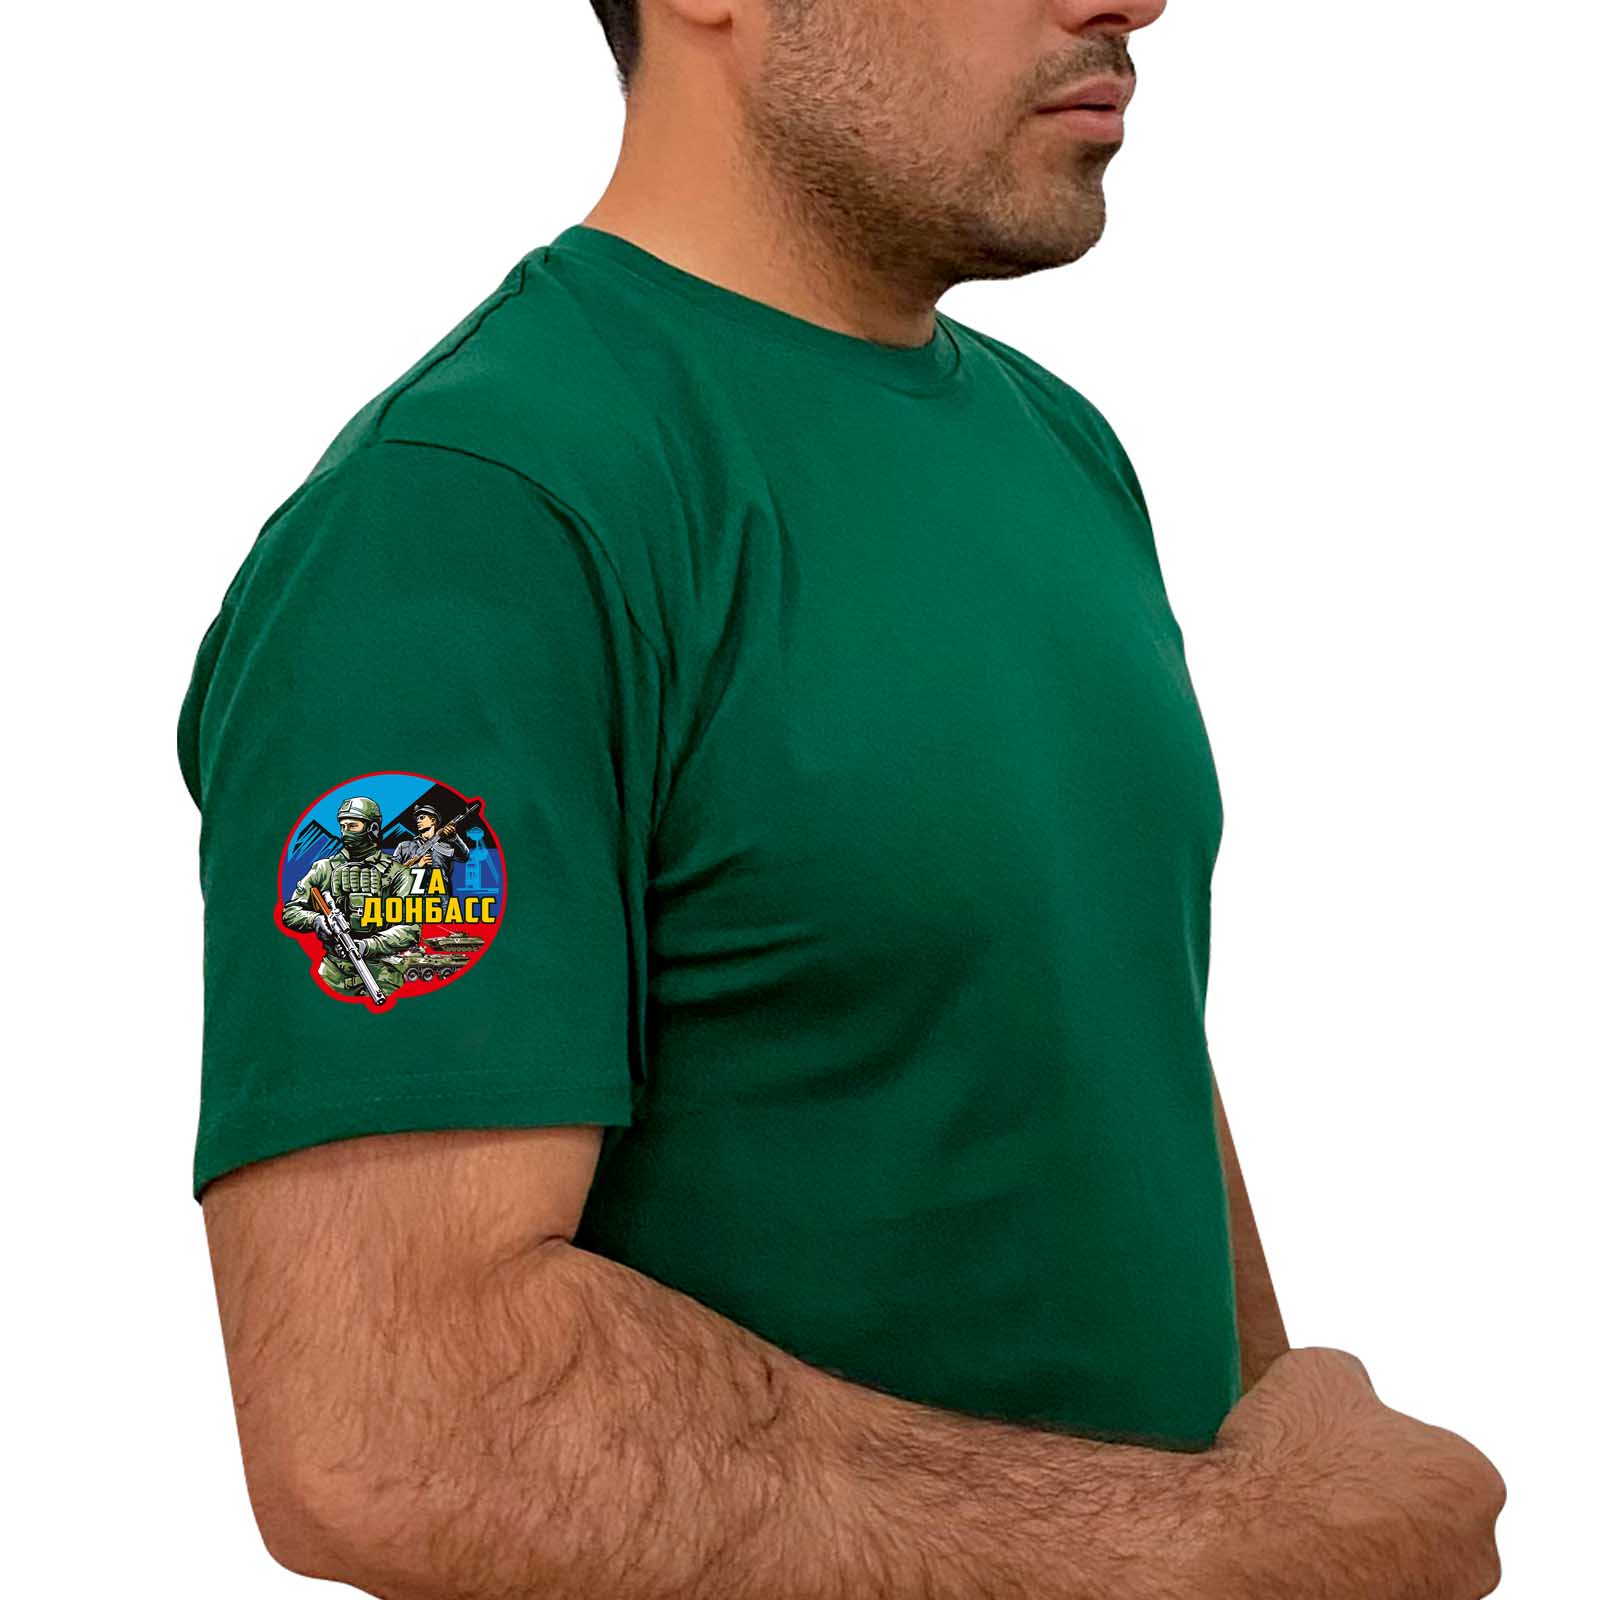 Зелёная футболка с термотрансфером "Zа Донбасс" на рукаве